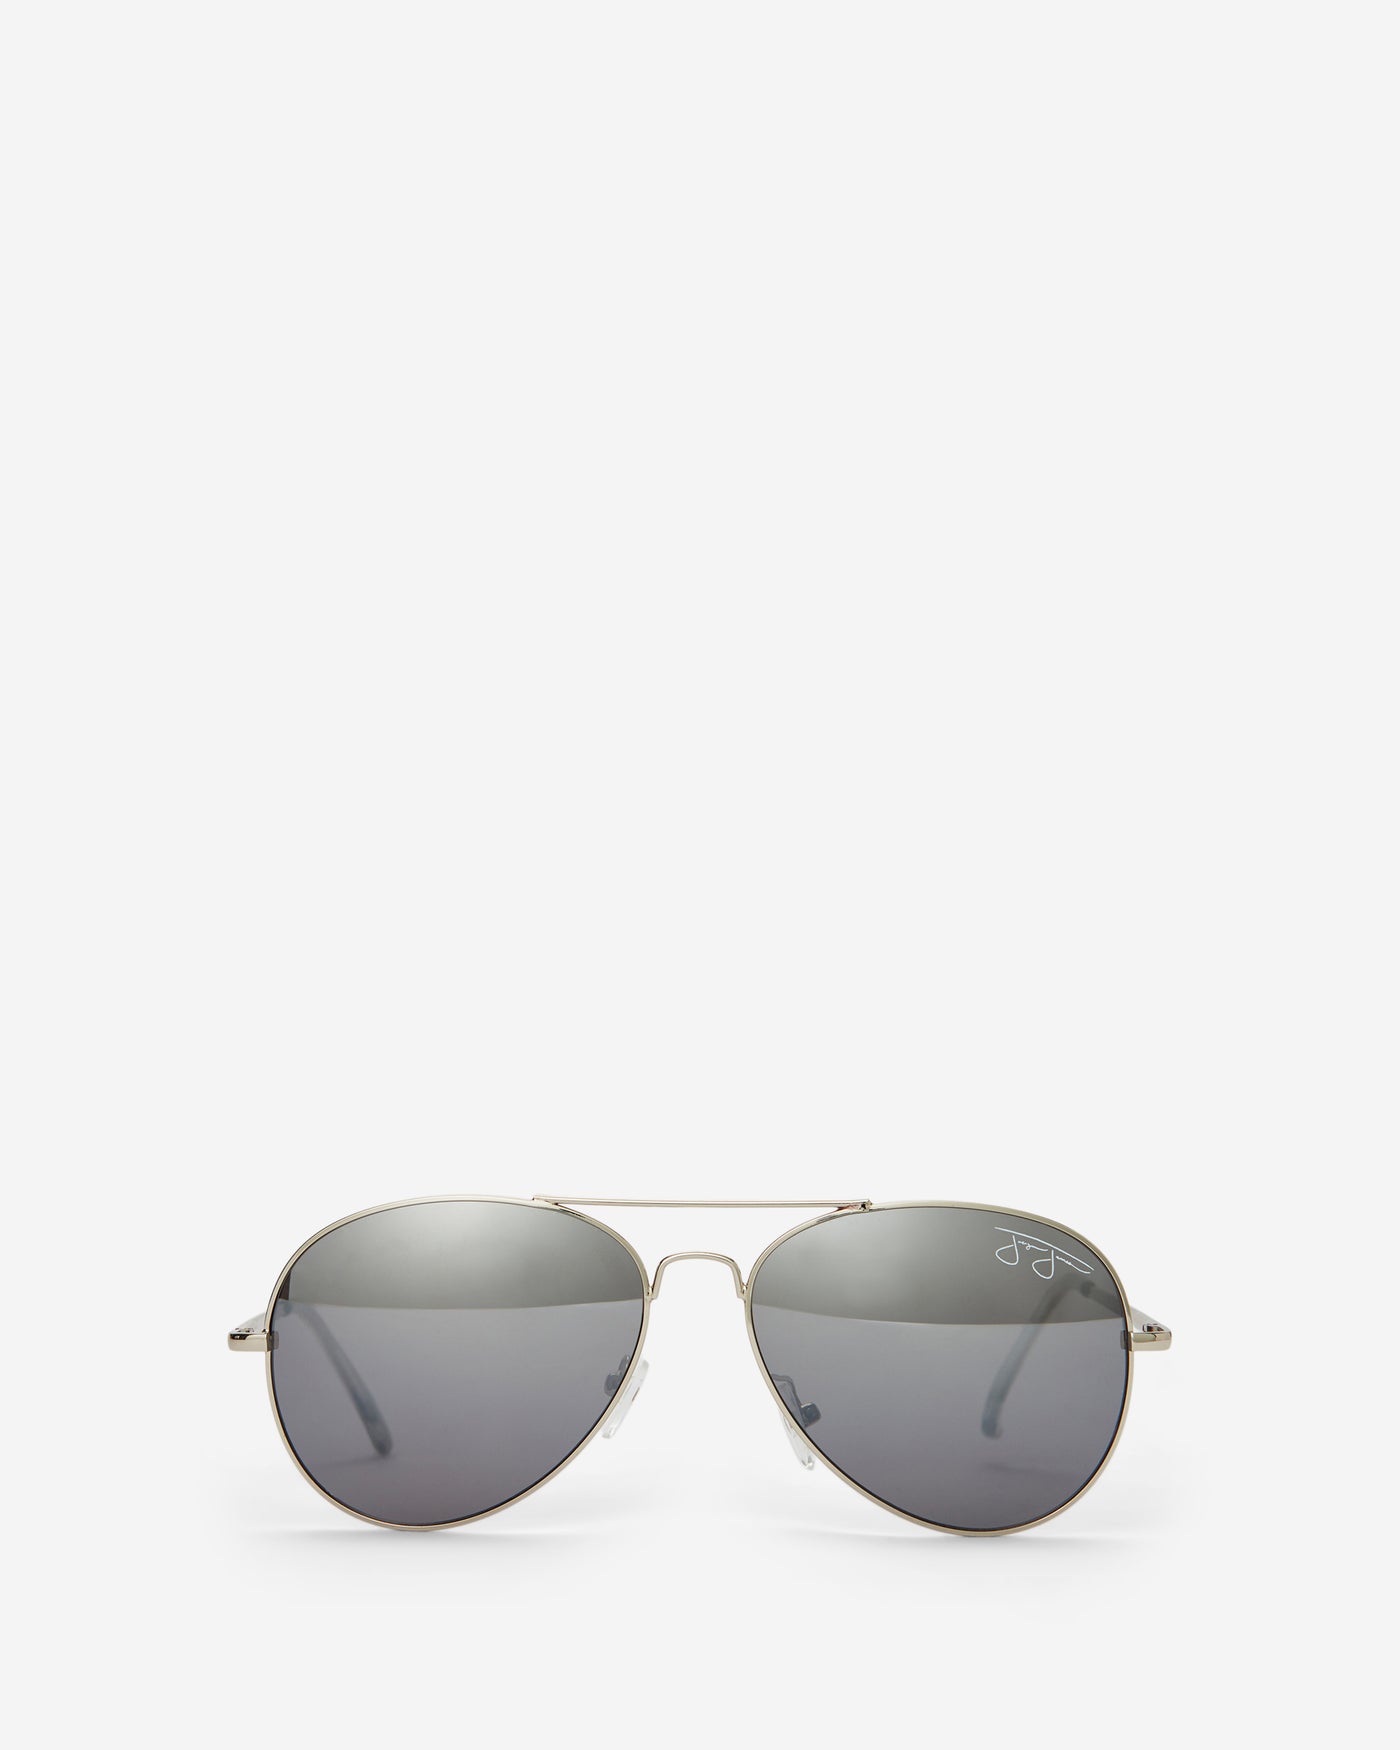 Classic Aviator Sunglasses - Gold Metal Frame with Smoke Lens Sunglasses Joey James, The Label   